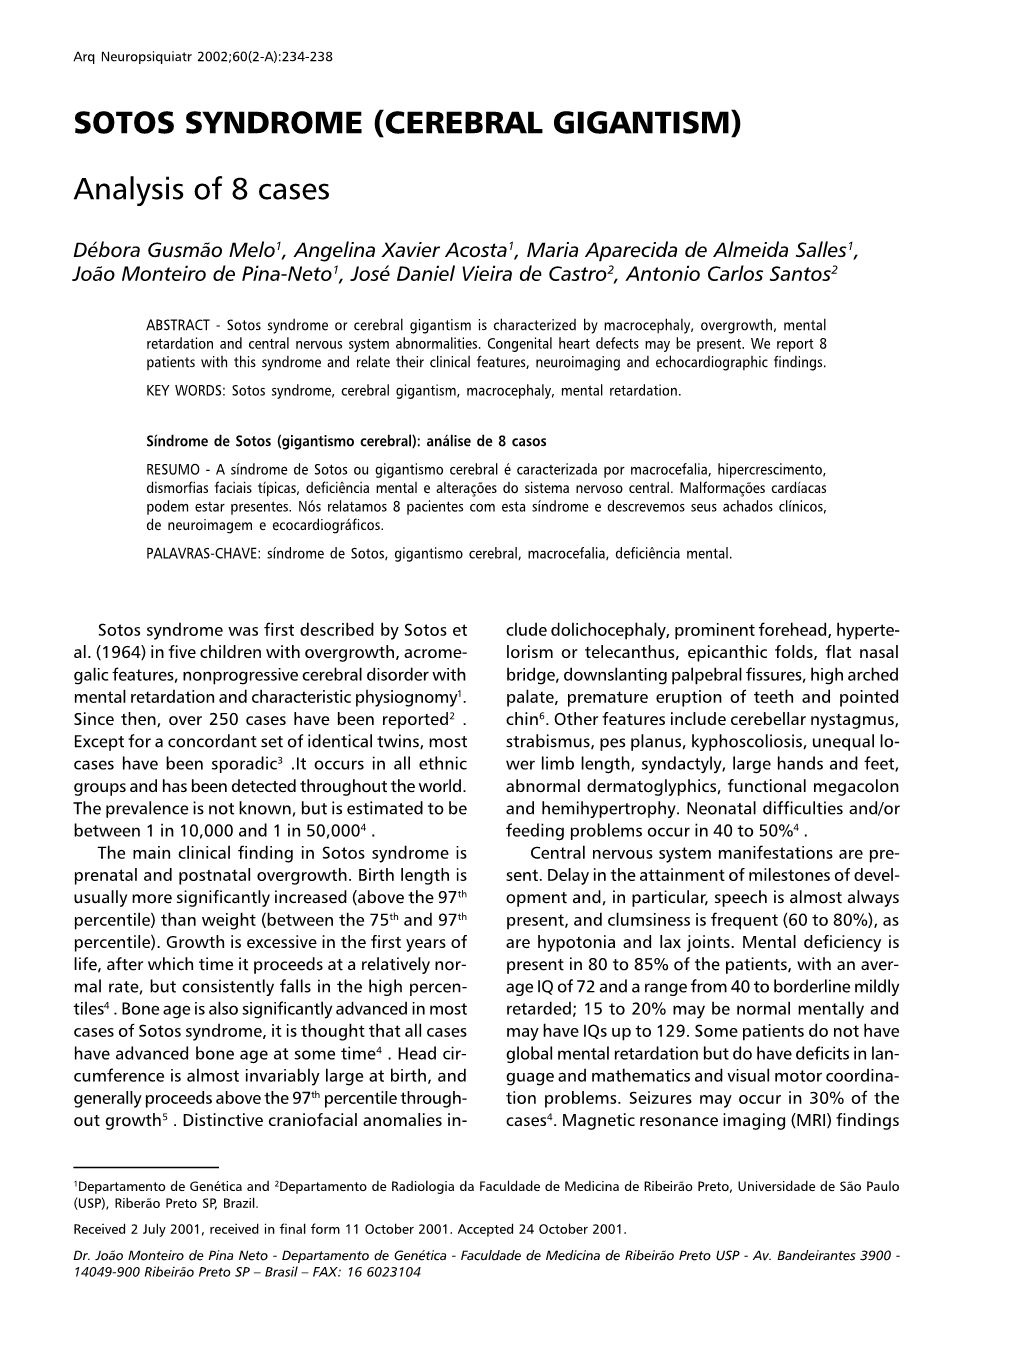 SOTOS SYNDROME (CEREBRAL GIGANTISM) Analysis of 8 Cases